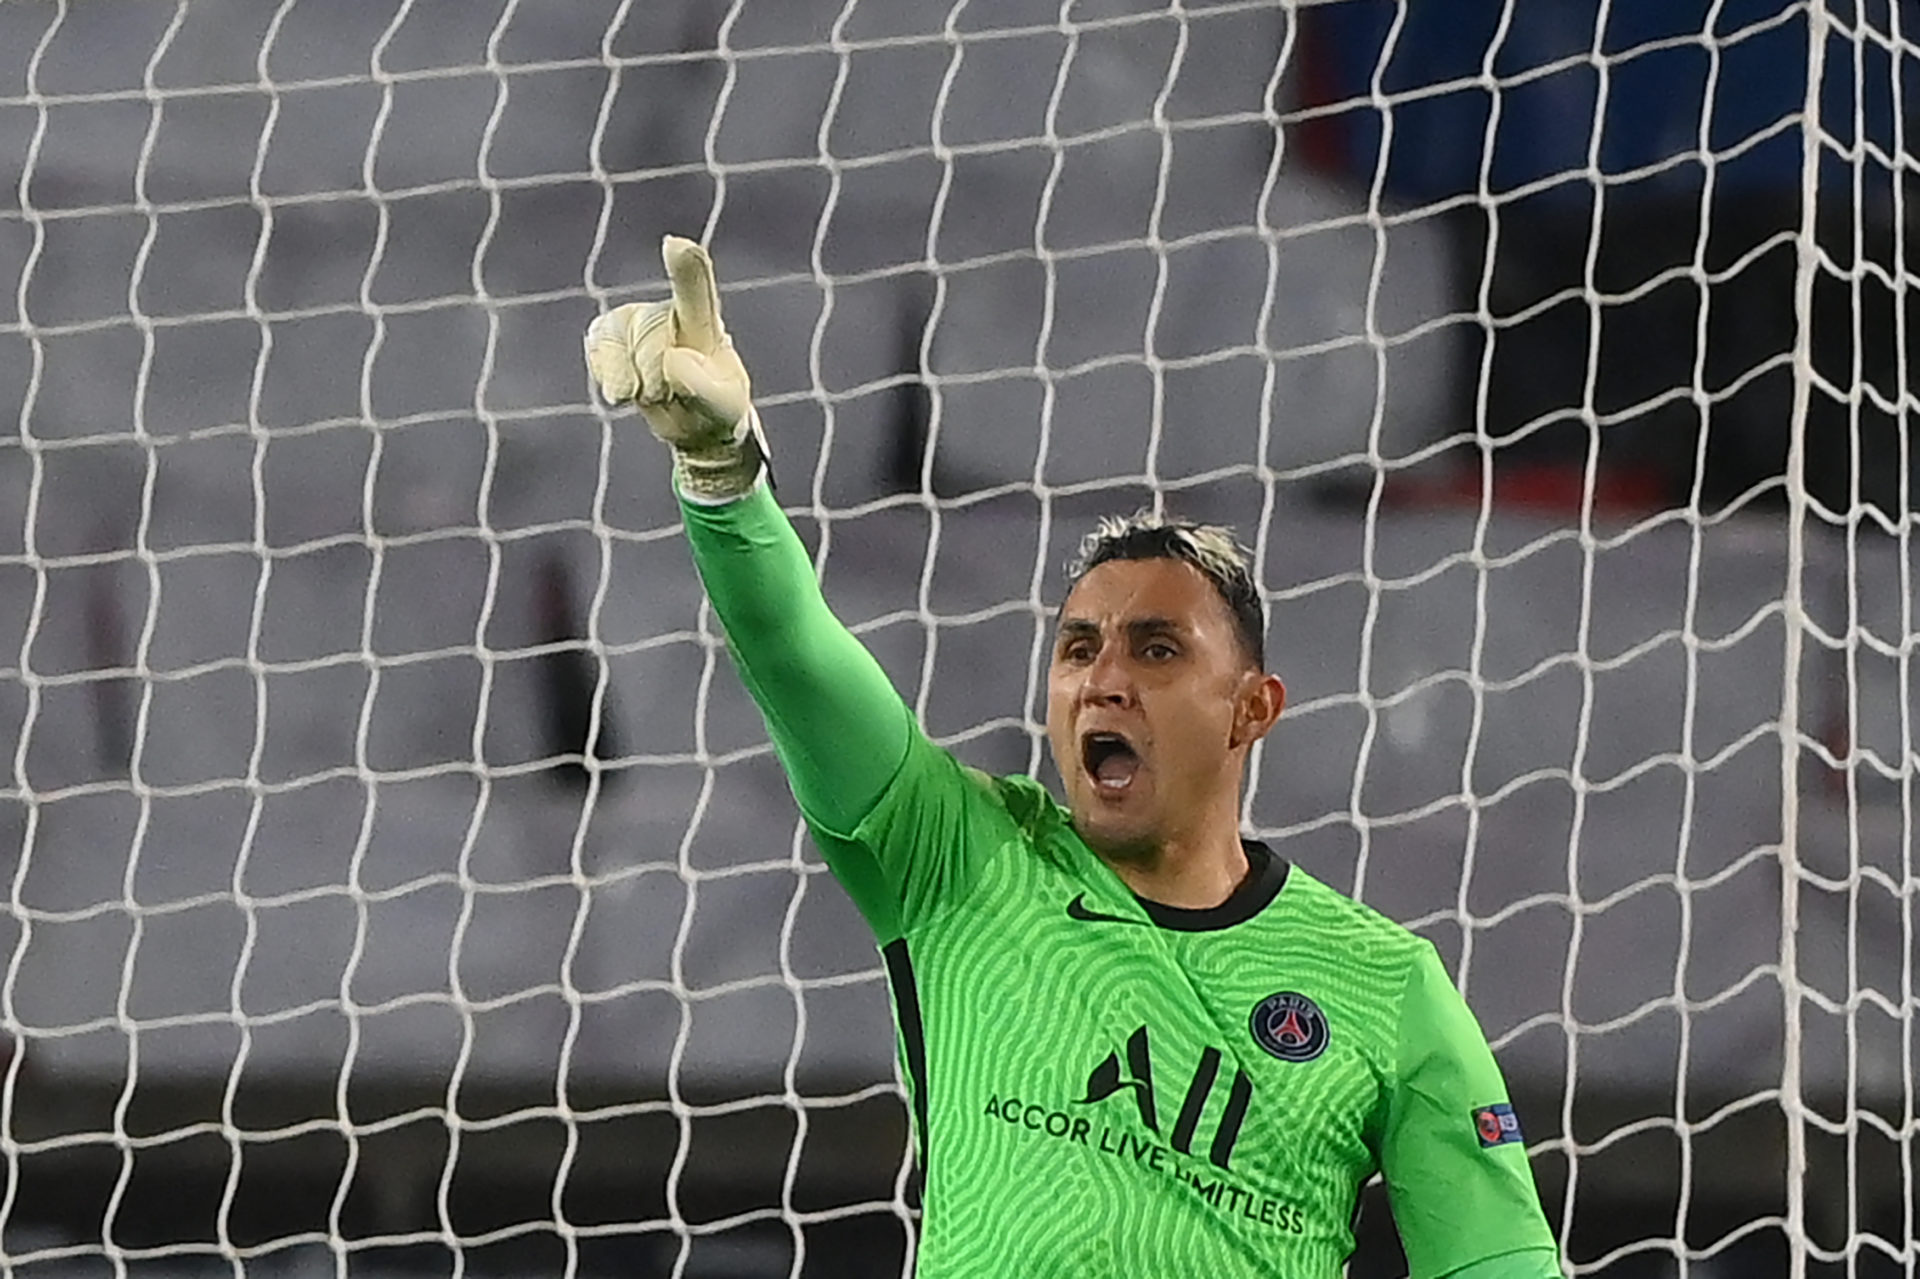 West Ham United reportedly want to sign PSG goalkeeper Keylor Navas